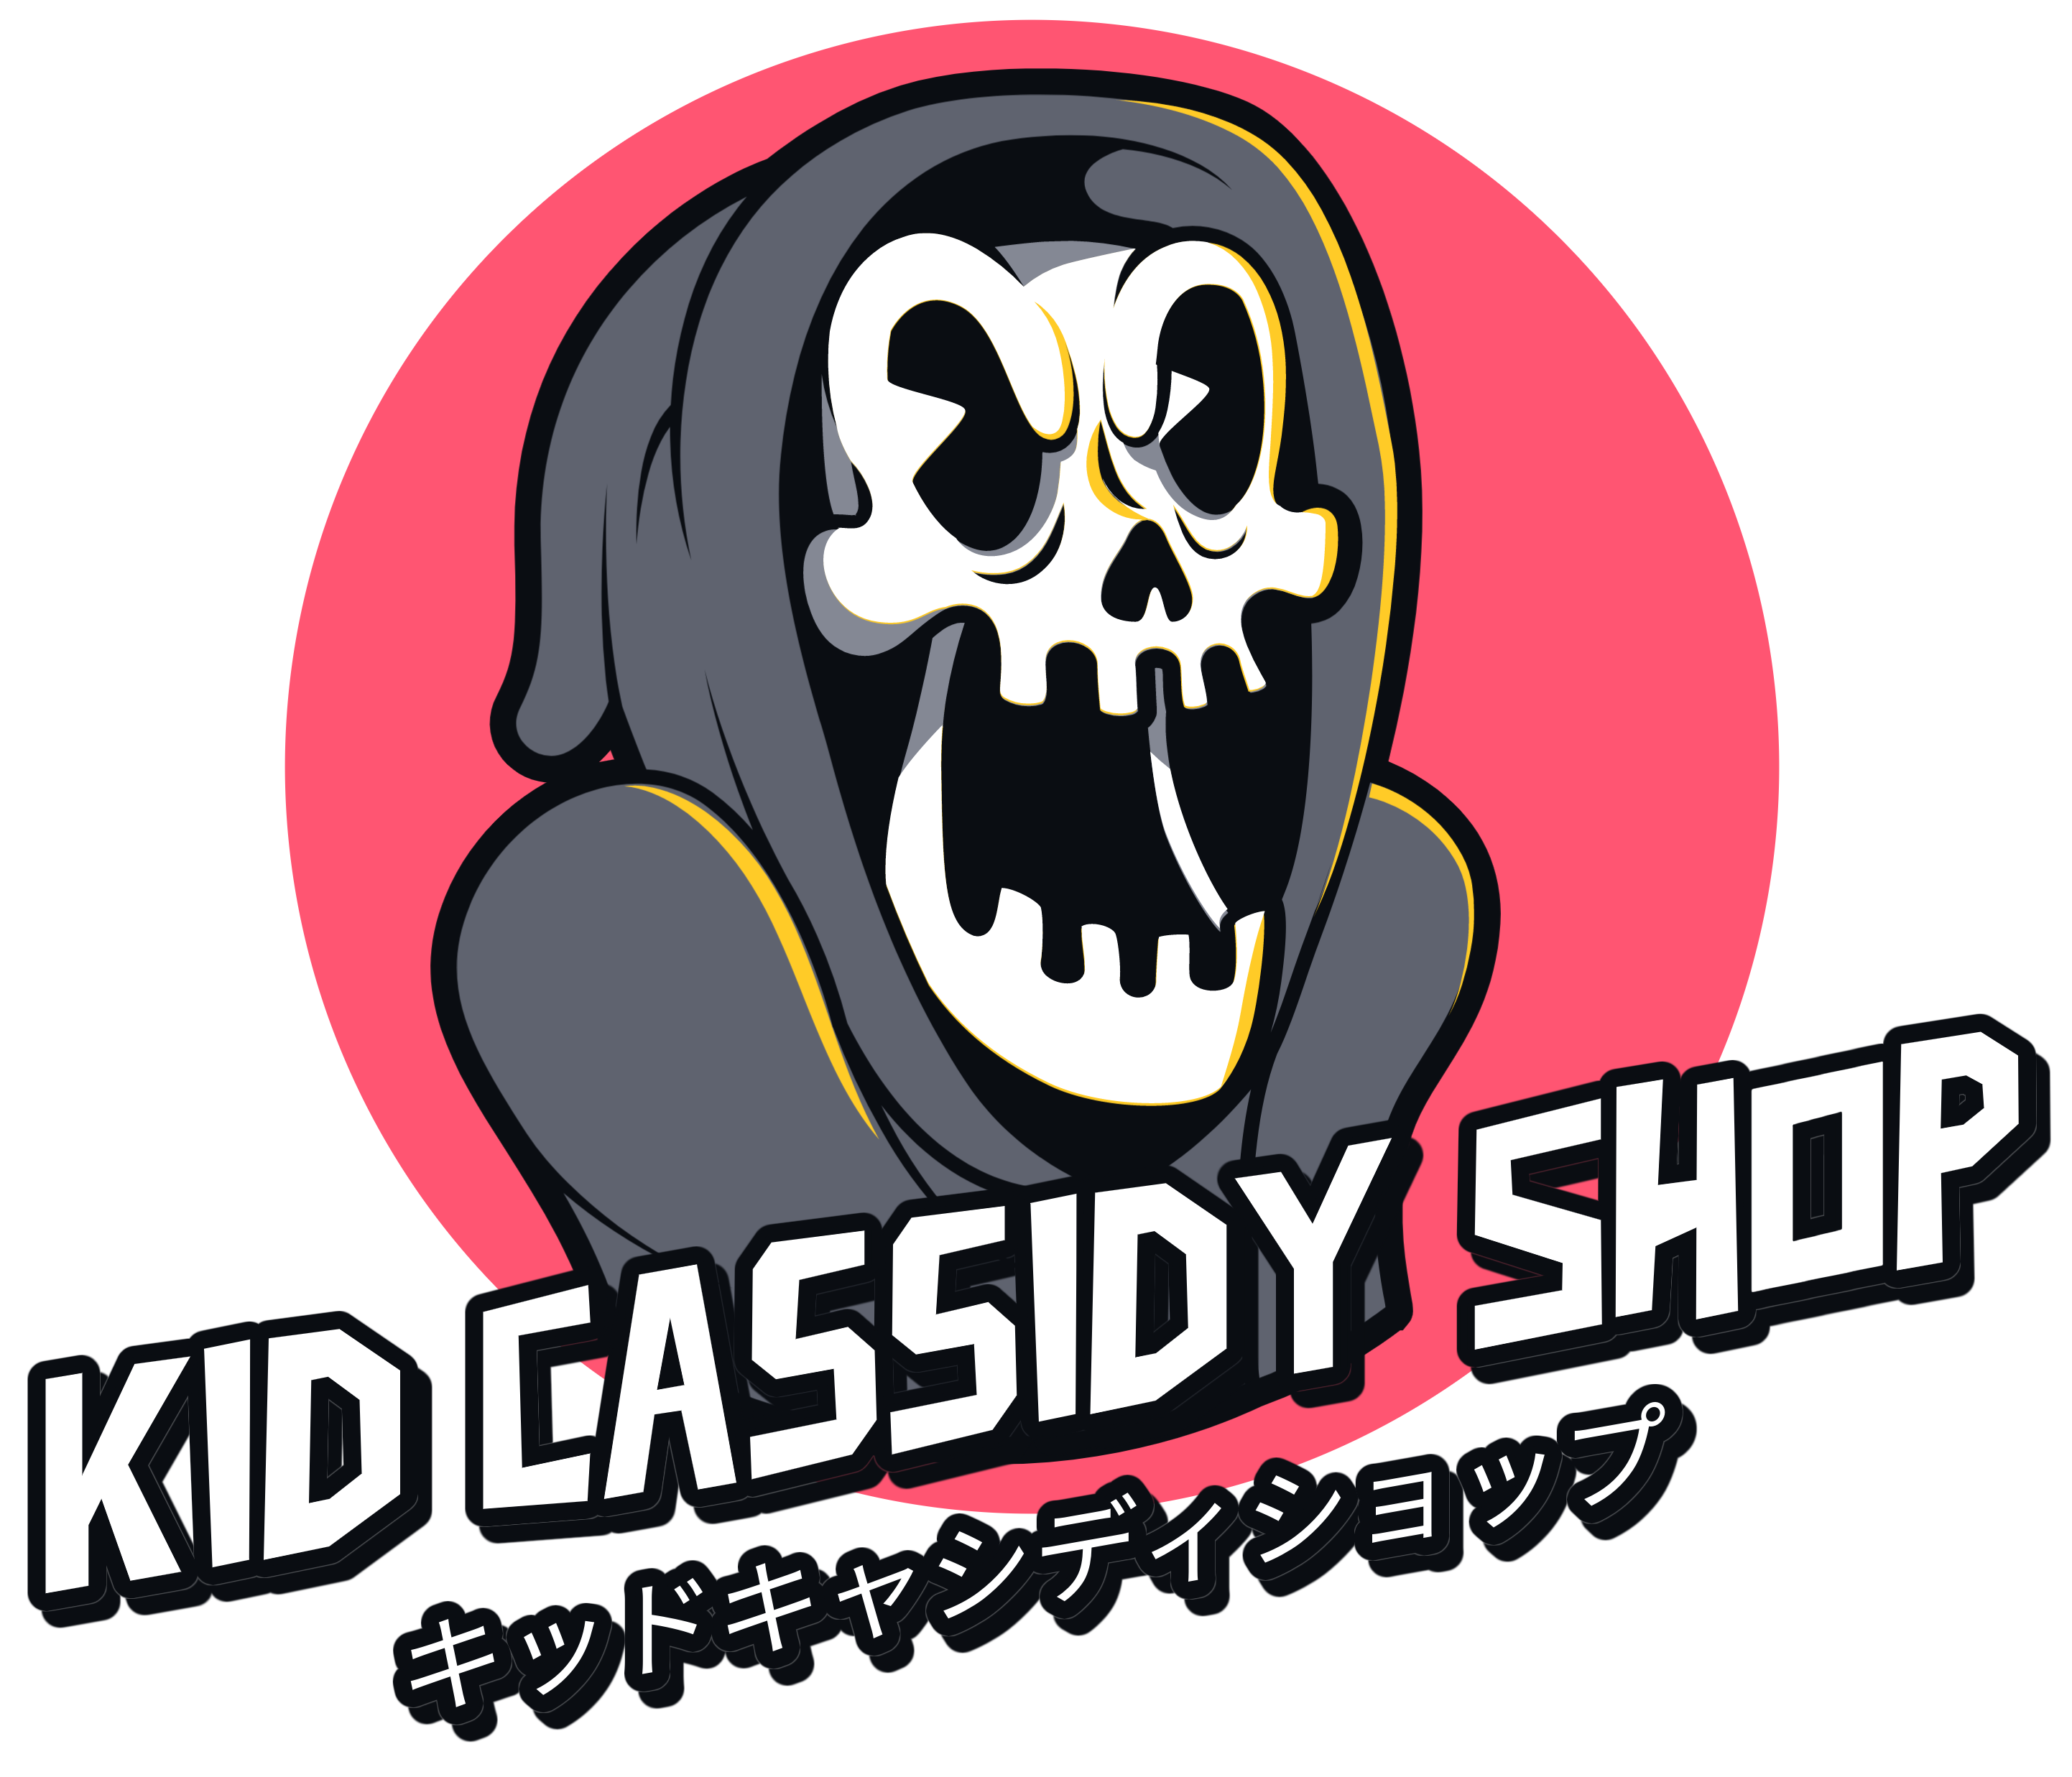 Kid Cassidy Shop